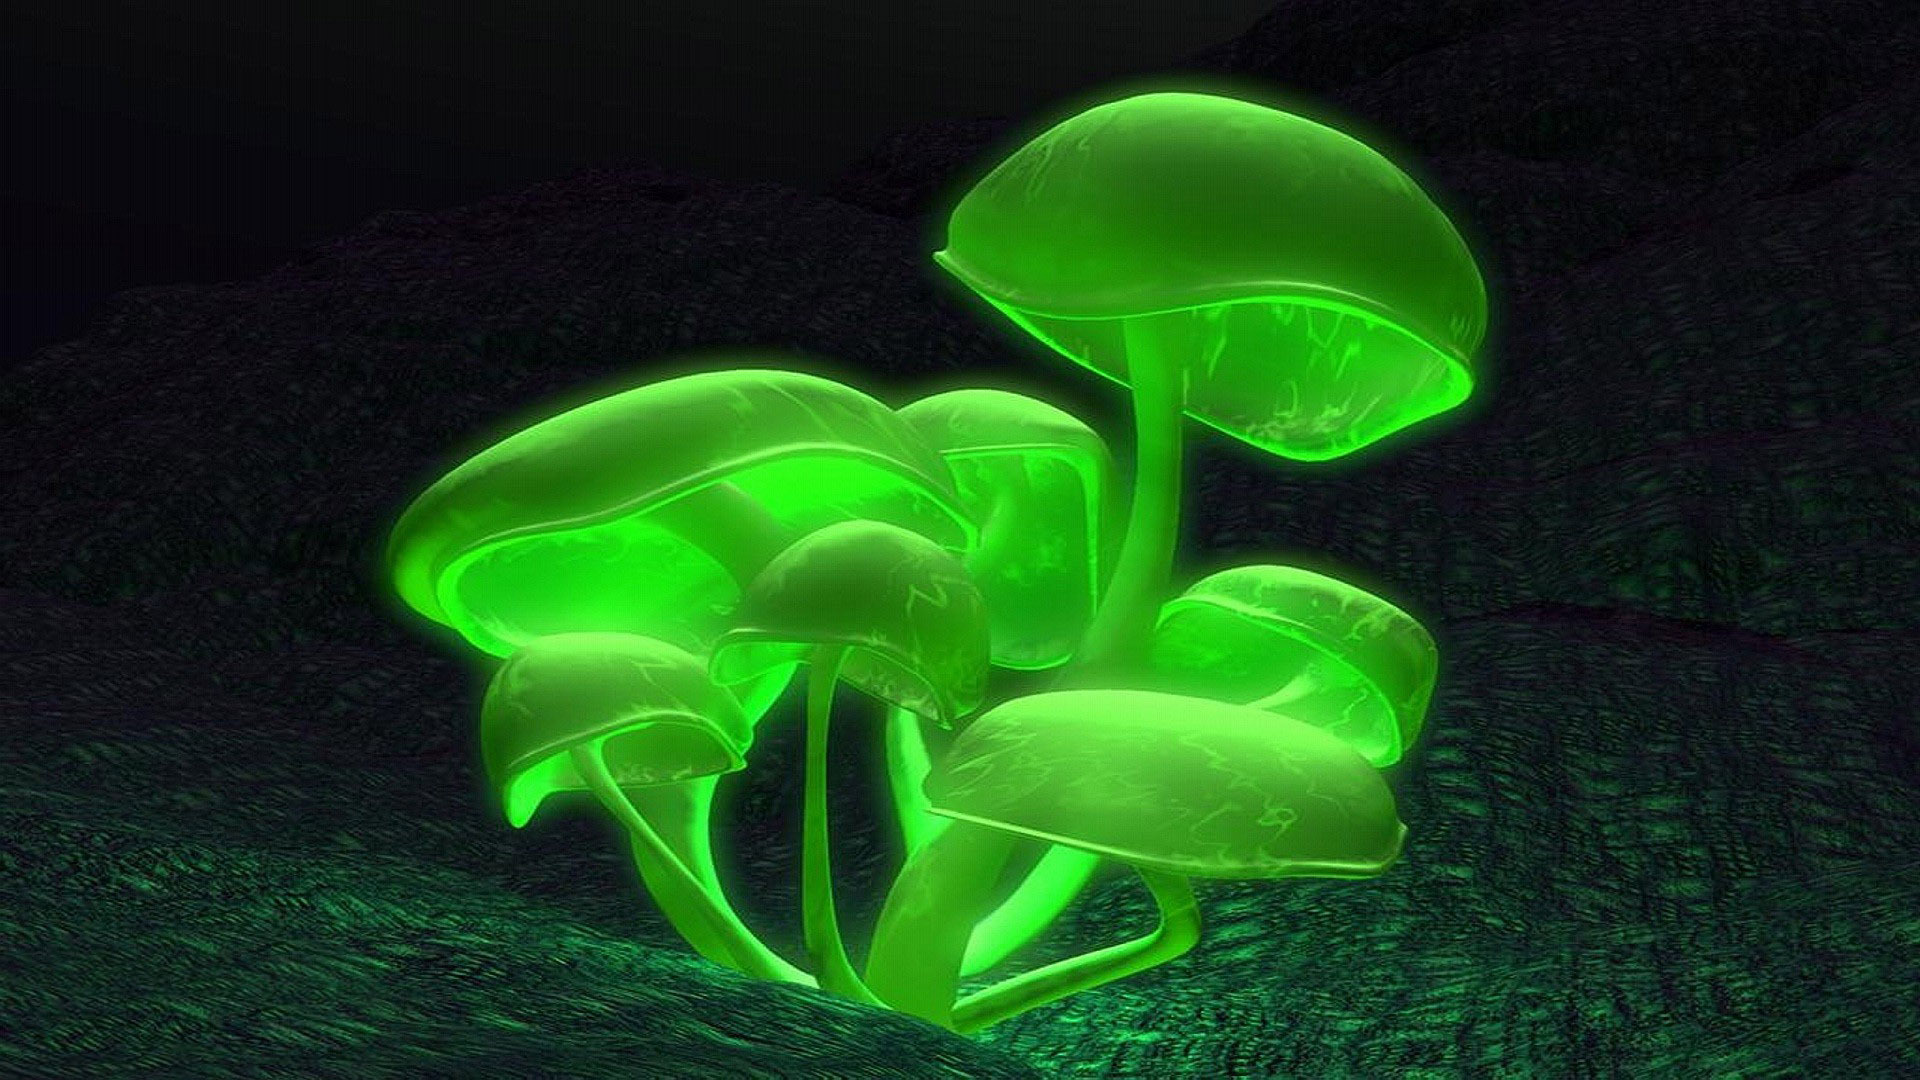 Neon Mushroom Wallpaper Image Pictures Becuo